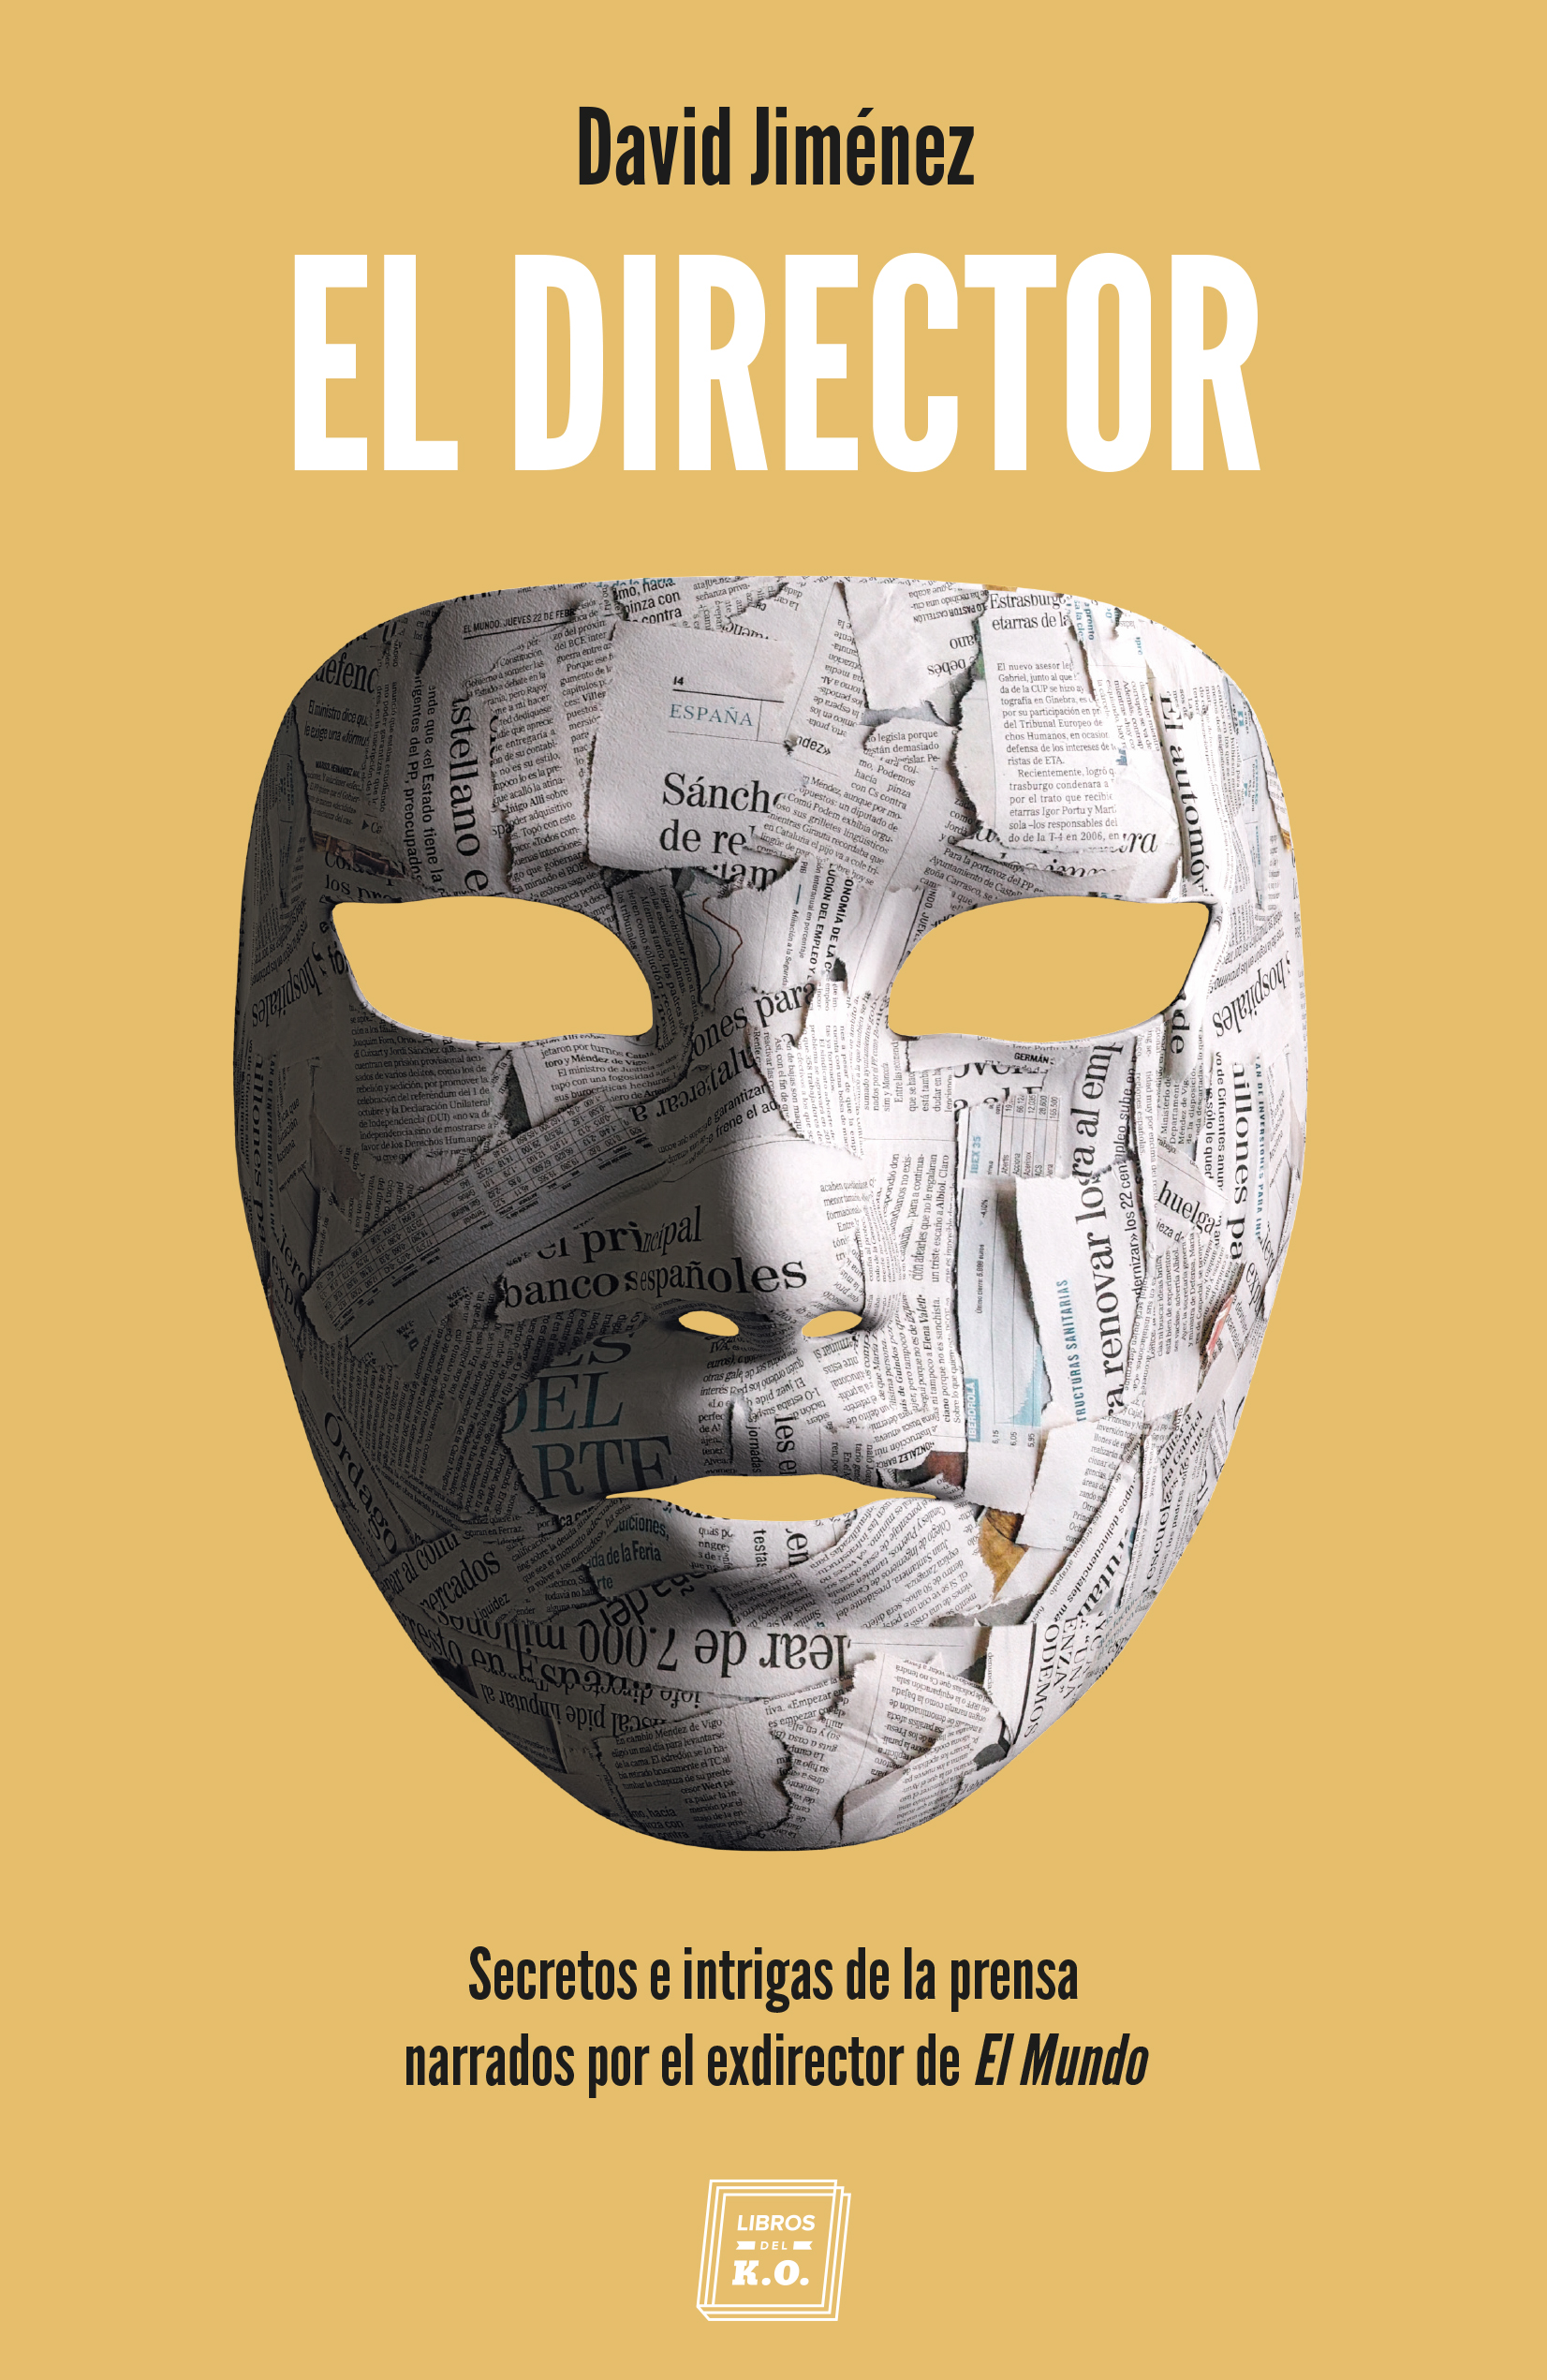 “El Director” (“The Editor”) by David Jiménez 